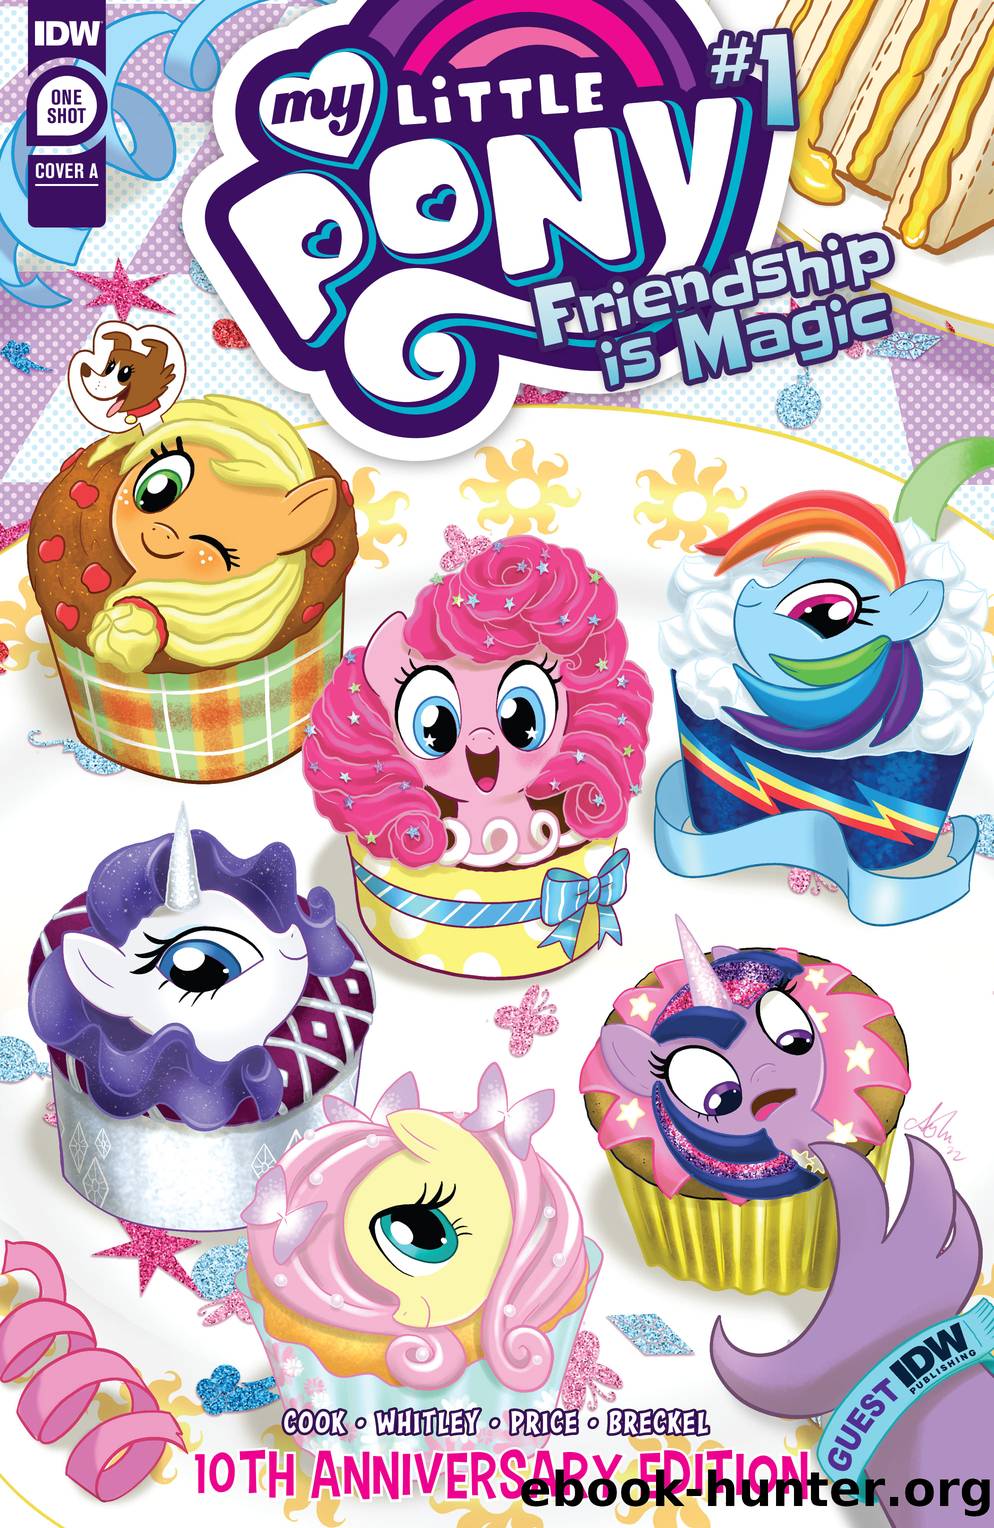 My Little Pony: Friendship is Magic â 10th Anniversary Edition by Katie Cook Andy Price Jeremy Whitley